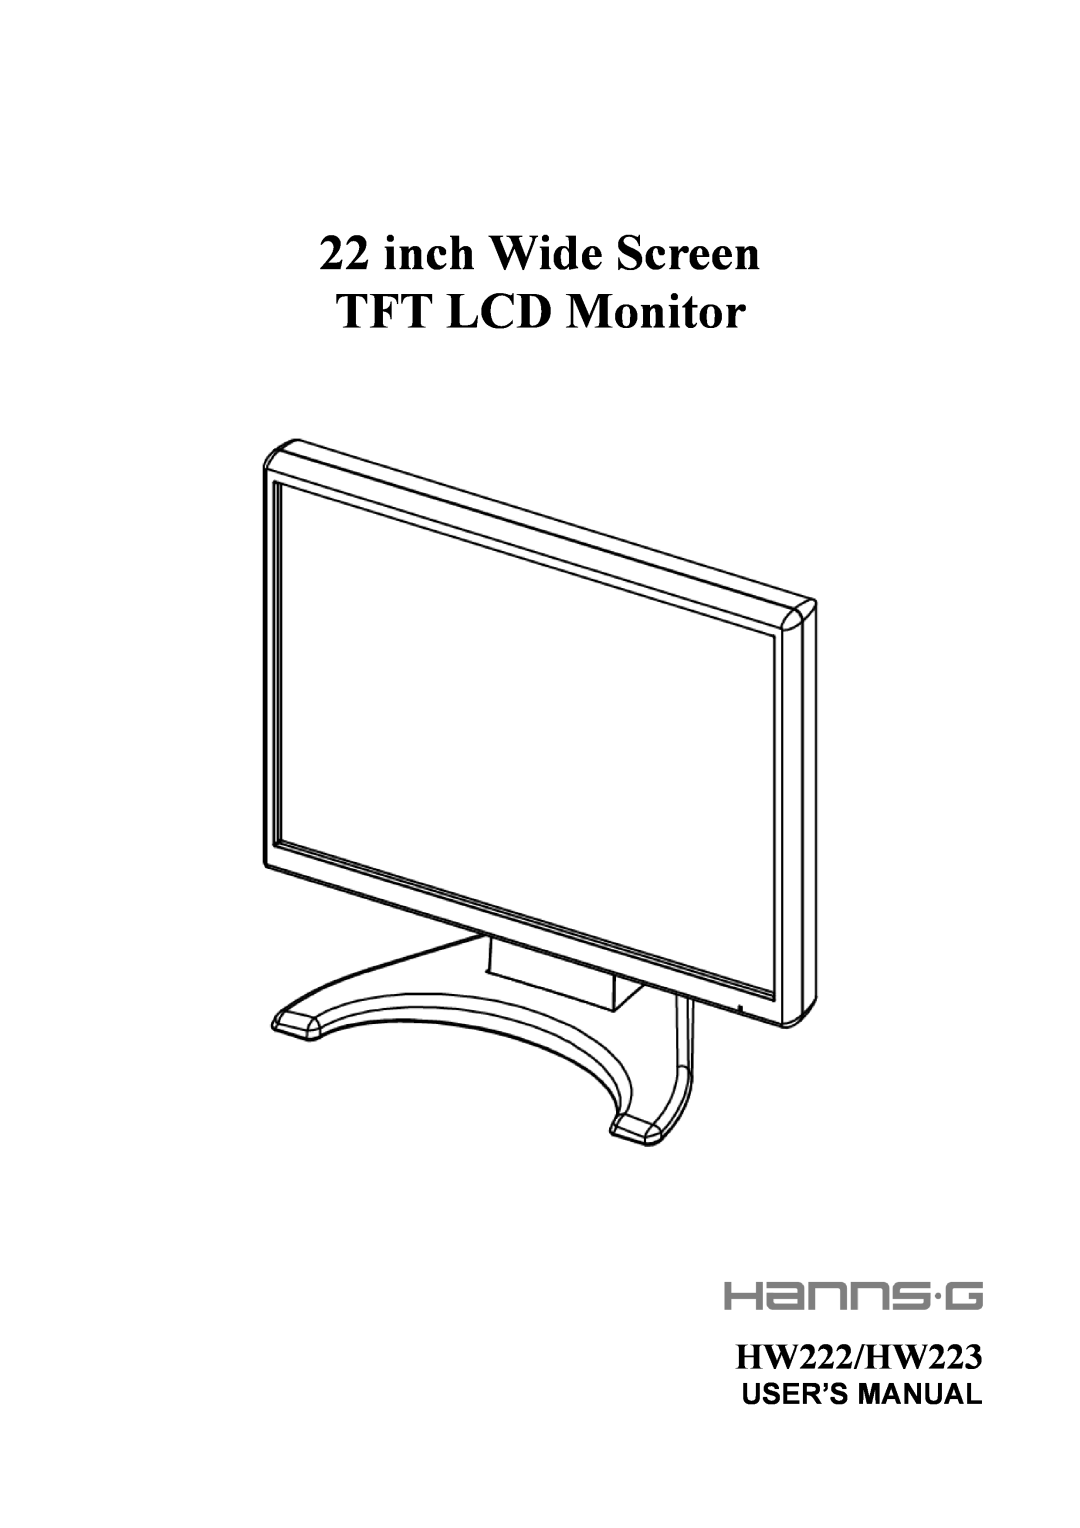 Hanns.G manual Gebruikshandleiding, inch Breedbeeld TFT LCD-monitor, HW222/HW223 